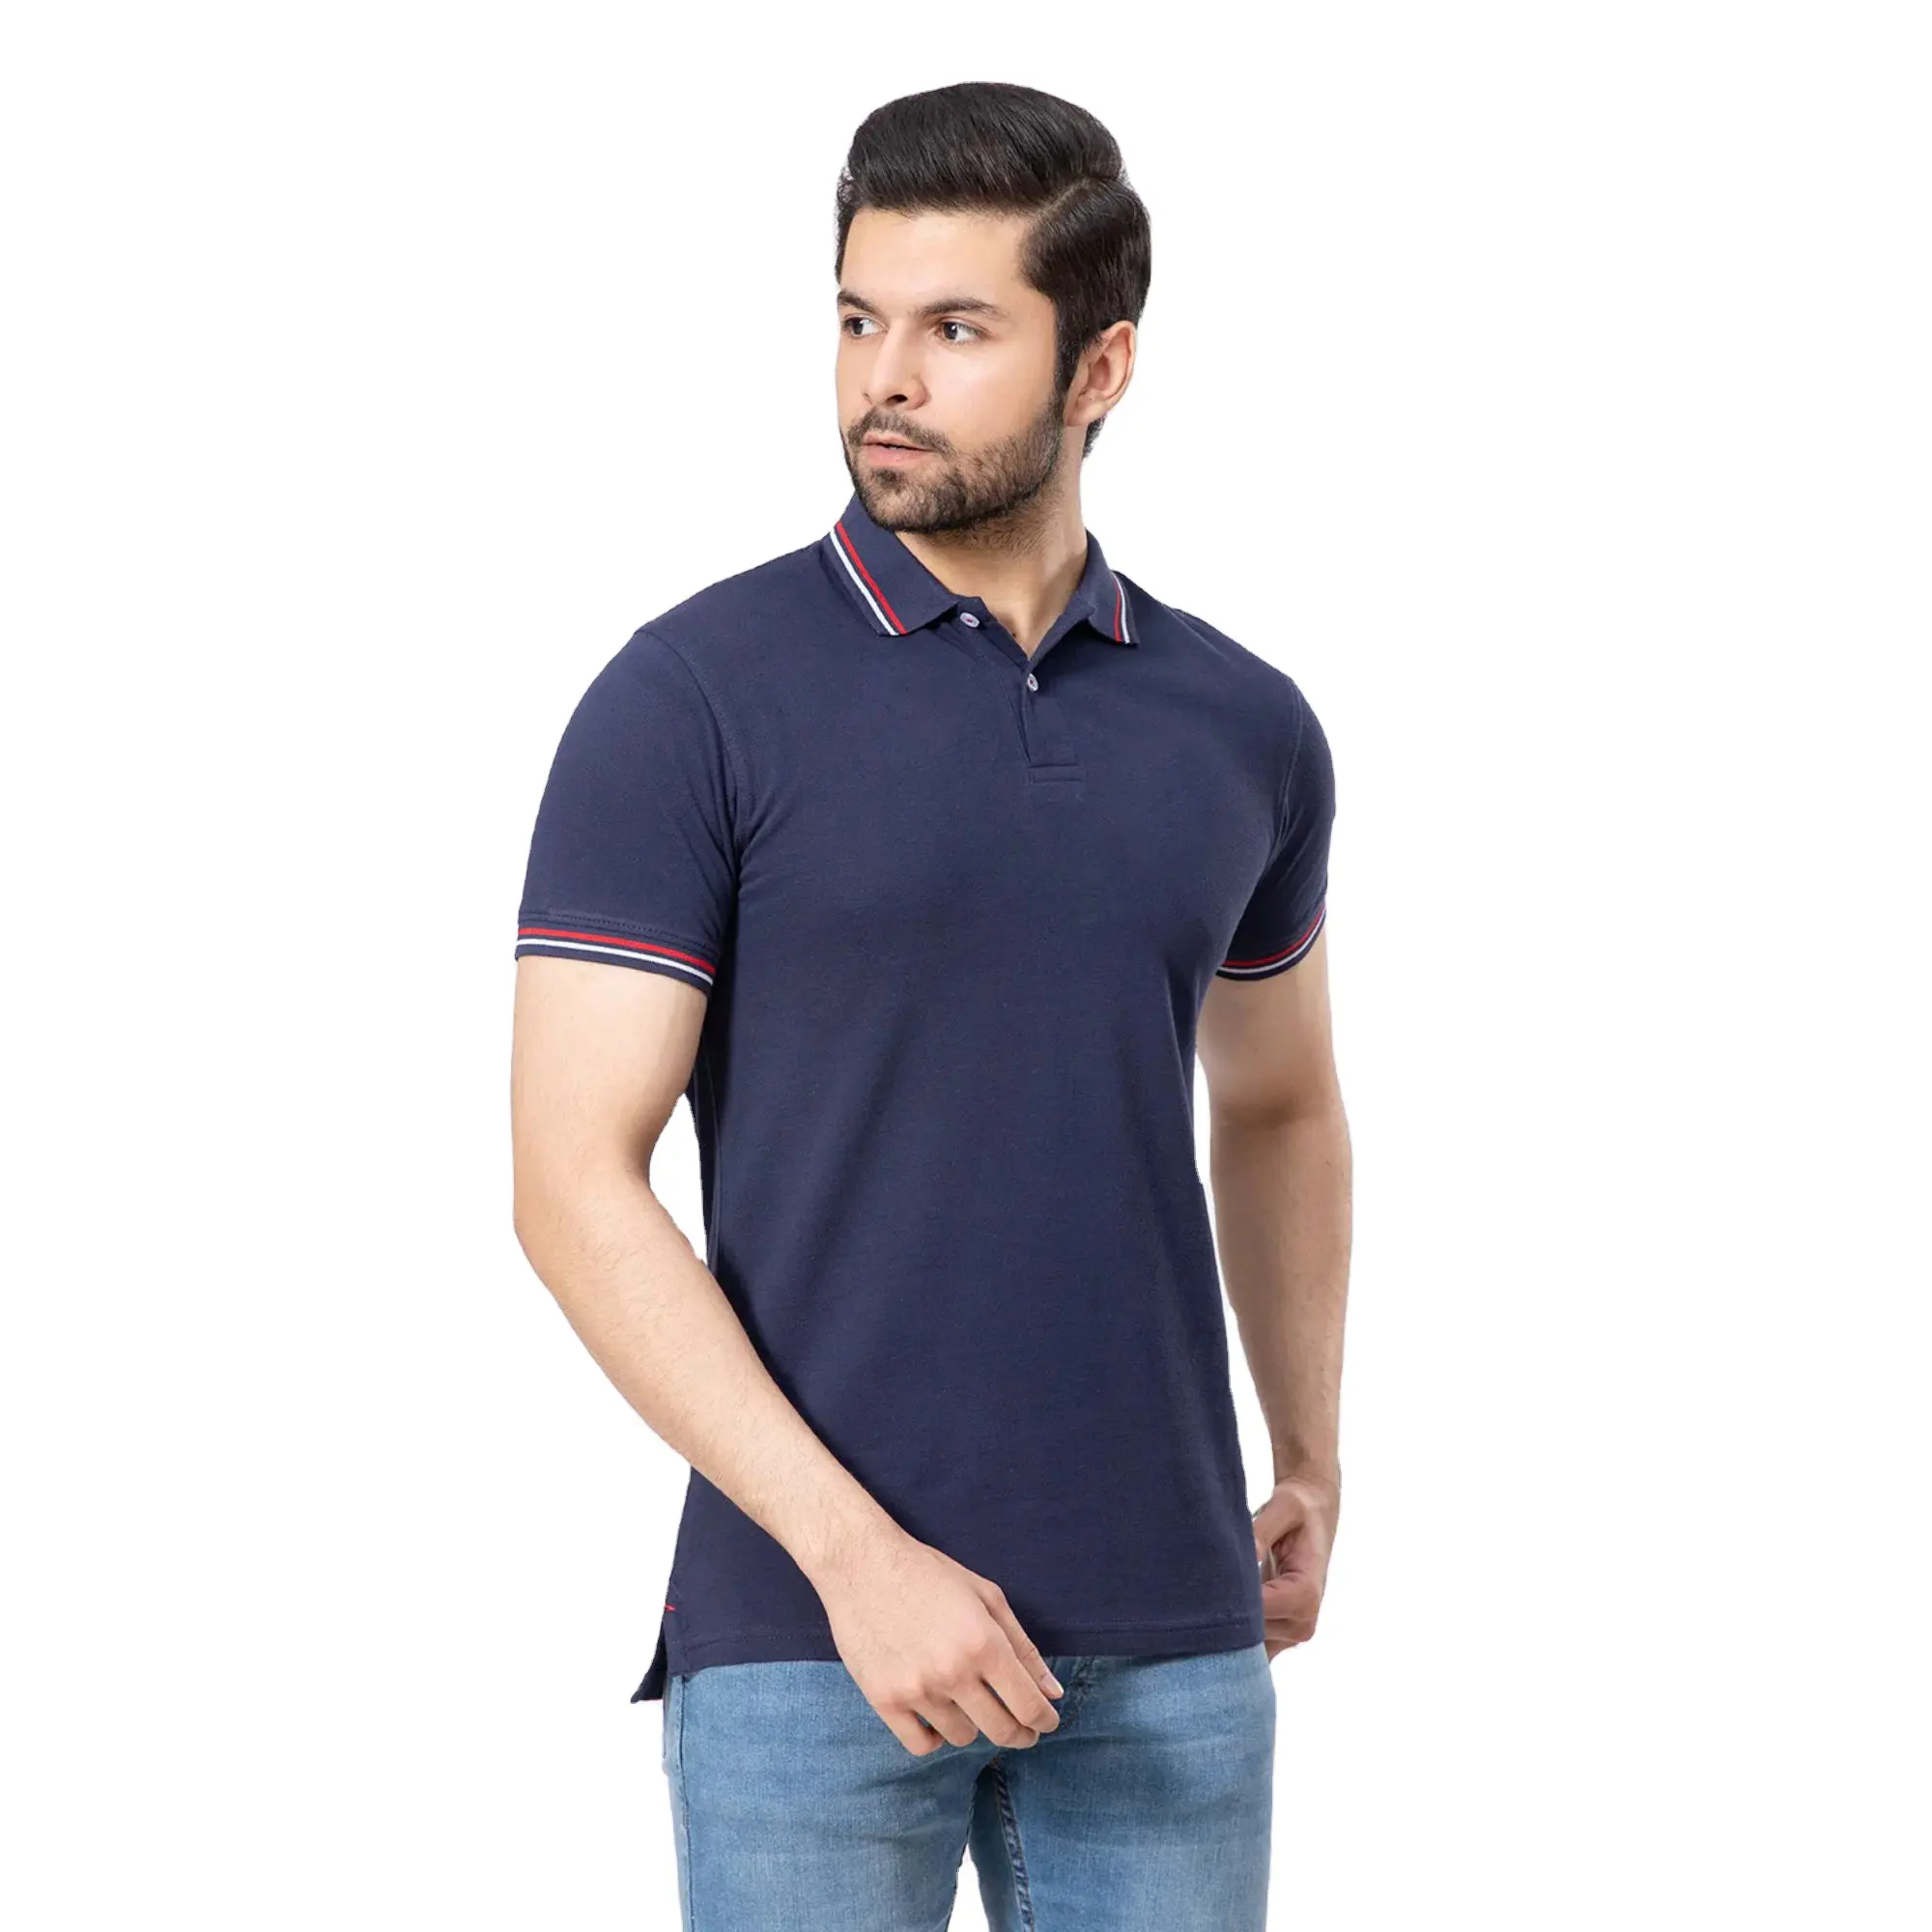 Wholesale Custom Embroidered Printing Logo Plain 100% Cotton Polyester Mens Uniform Golf Polo Shirts